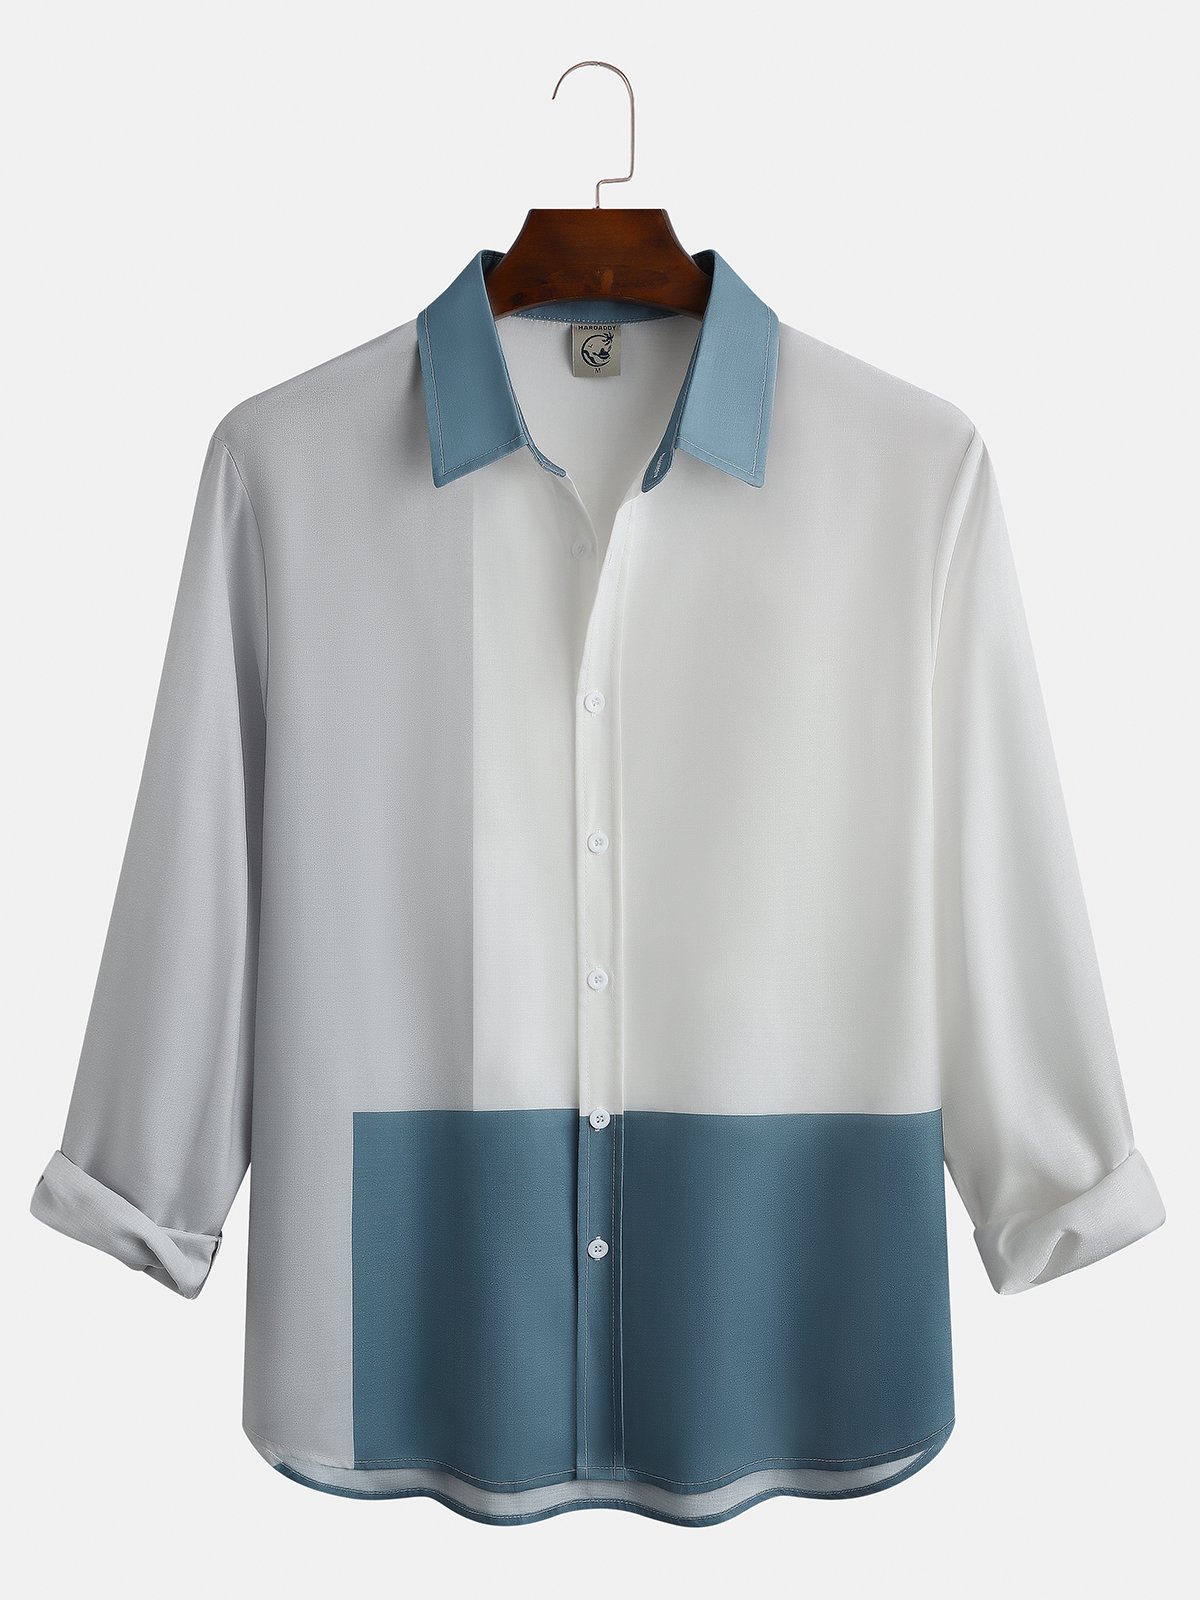 Geometric color block long-sleeved shirt casual style shirt lapel